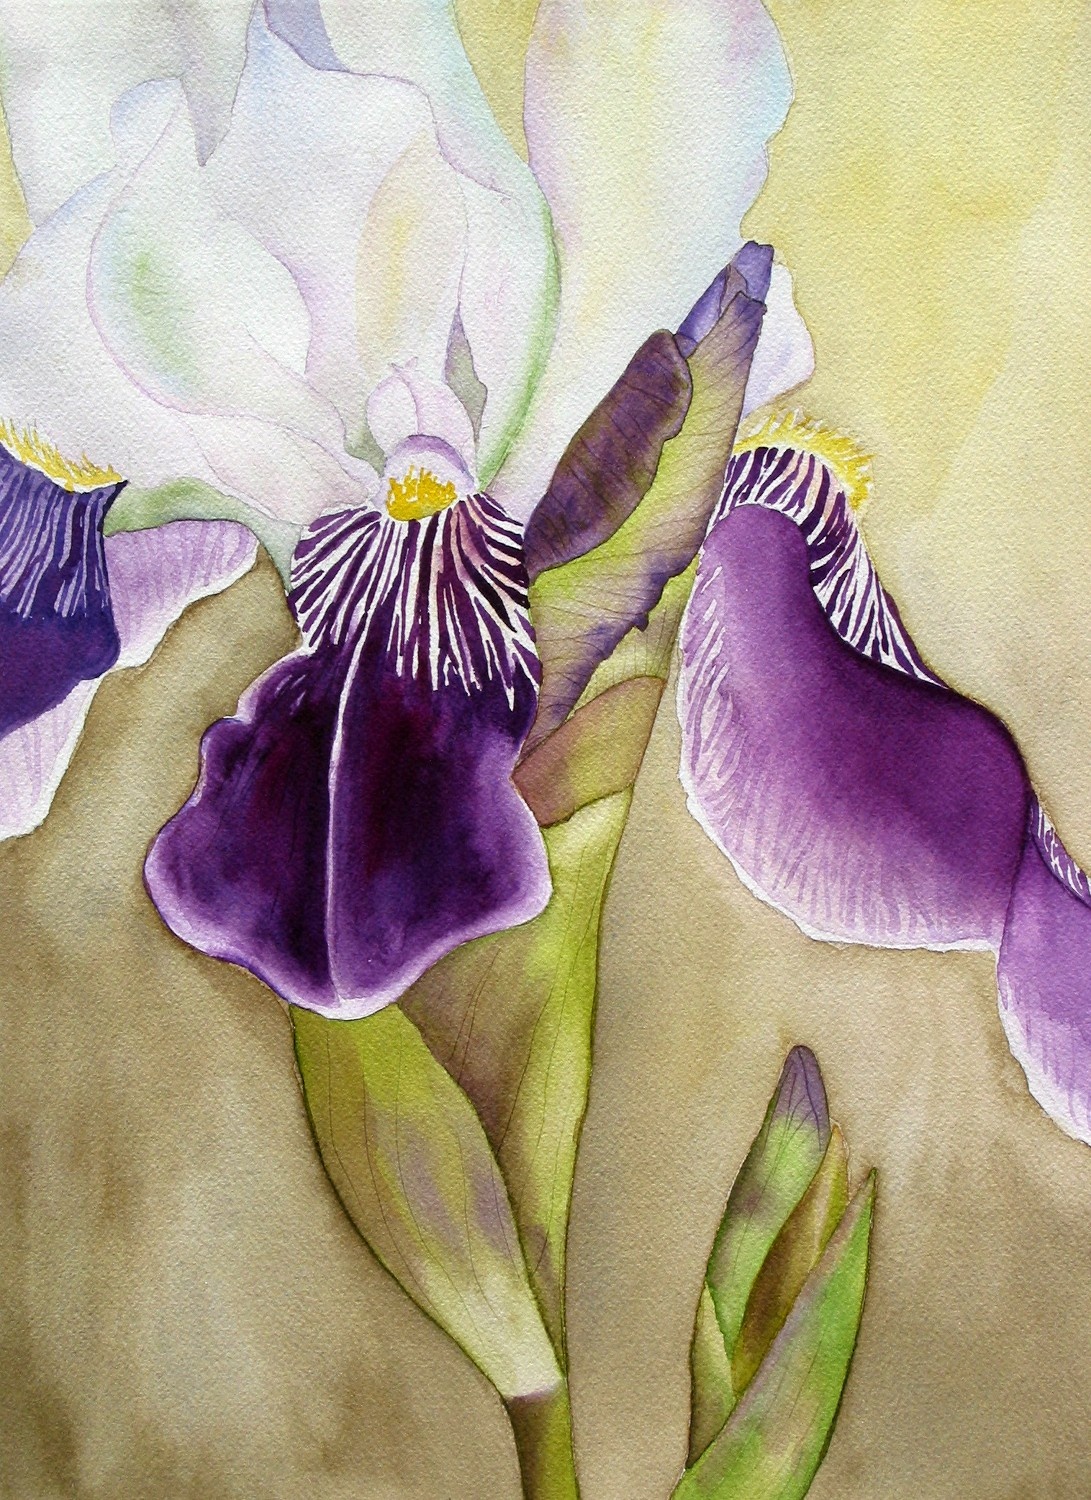 Iris flower Stock Images